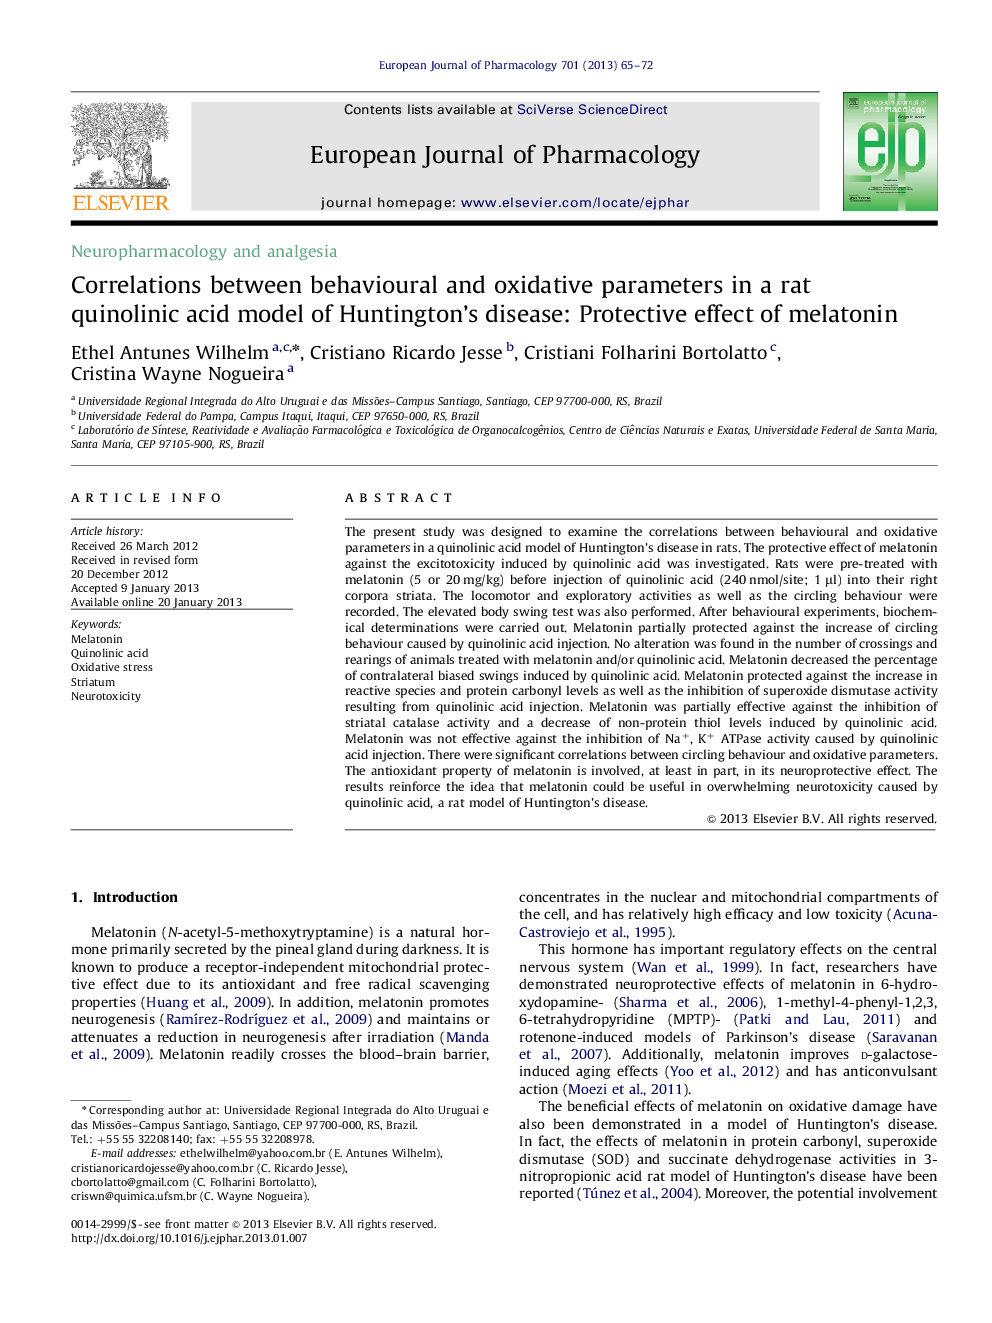 Correlations between behavioural and oxidative parameters in a rat quinolinic acid model of Huntington's disease: Protective effect of melatonin